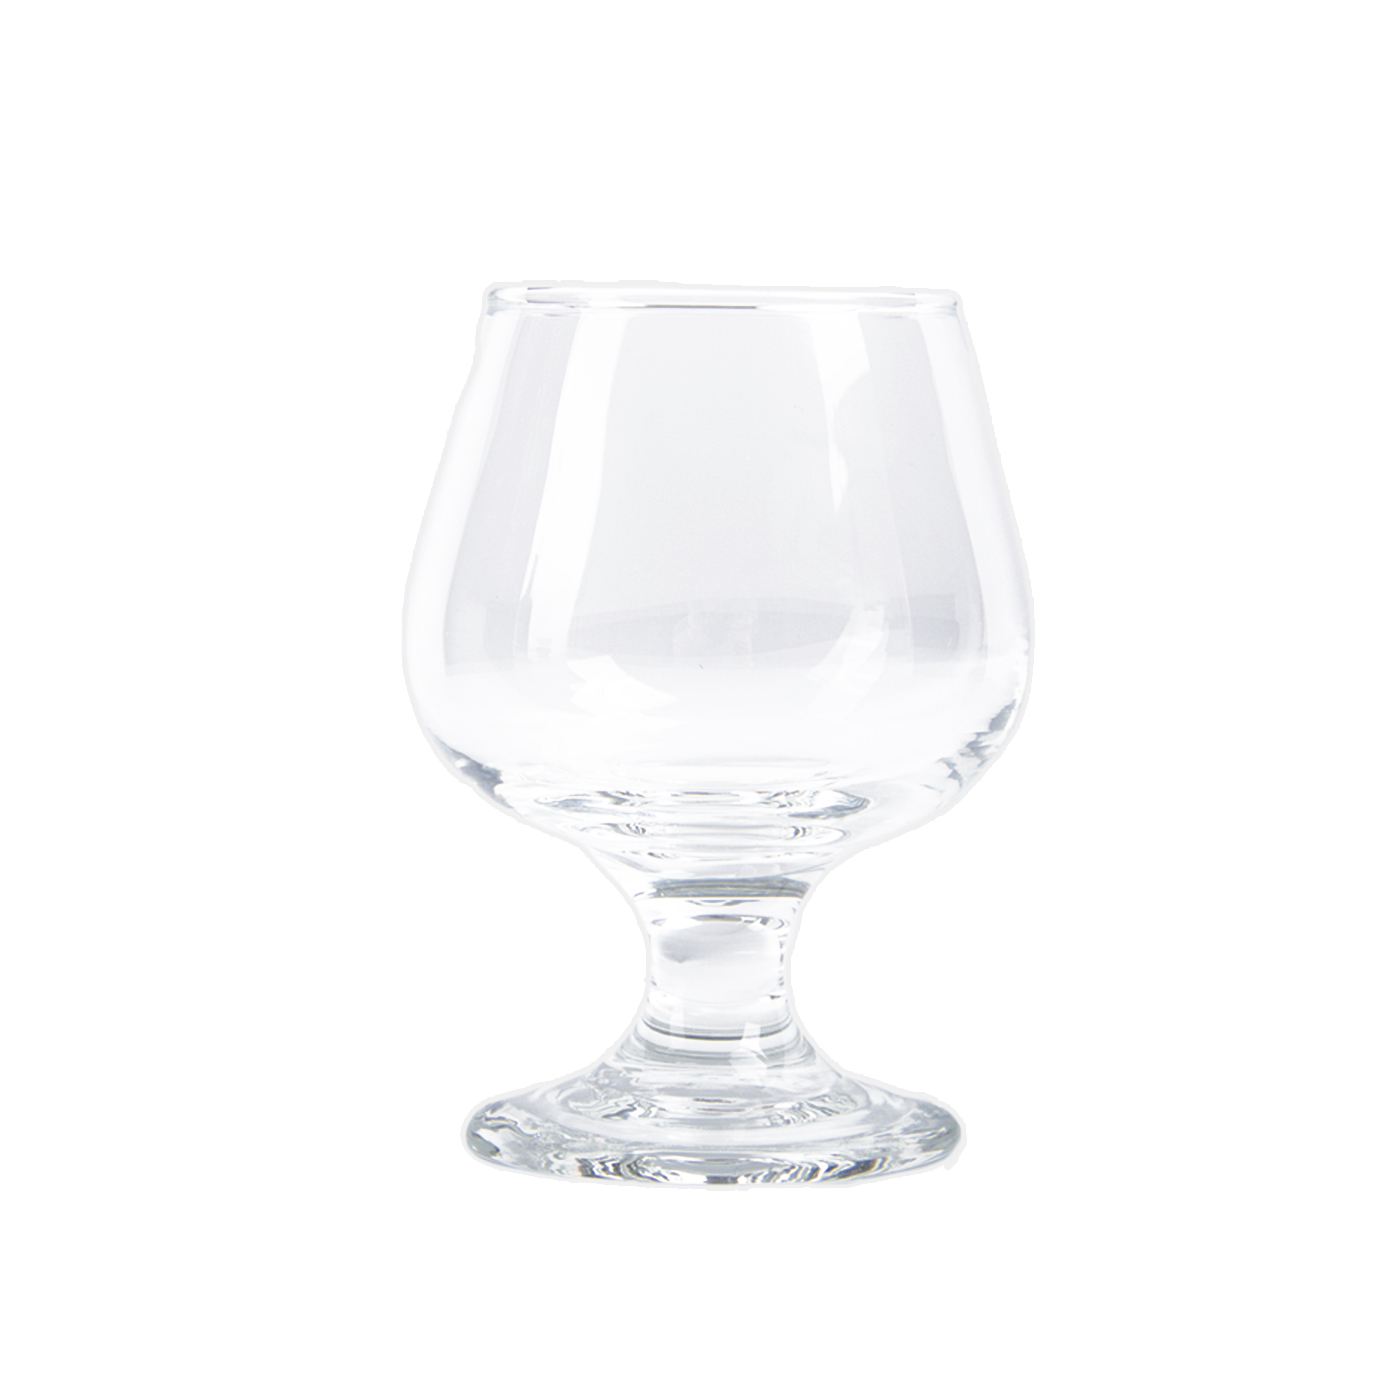 4 oz. Brandy Snifter Glass